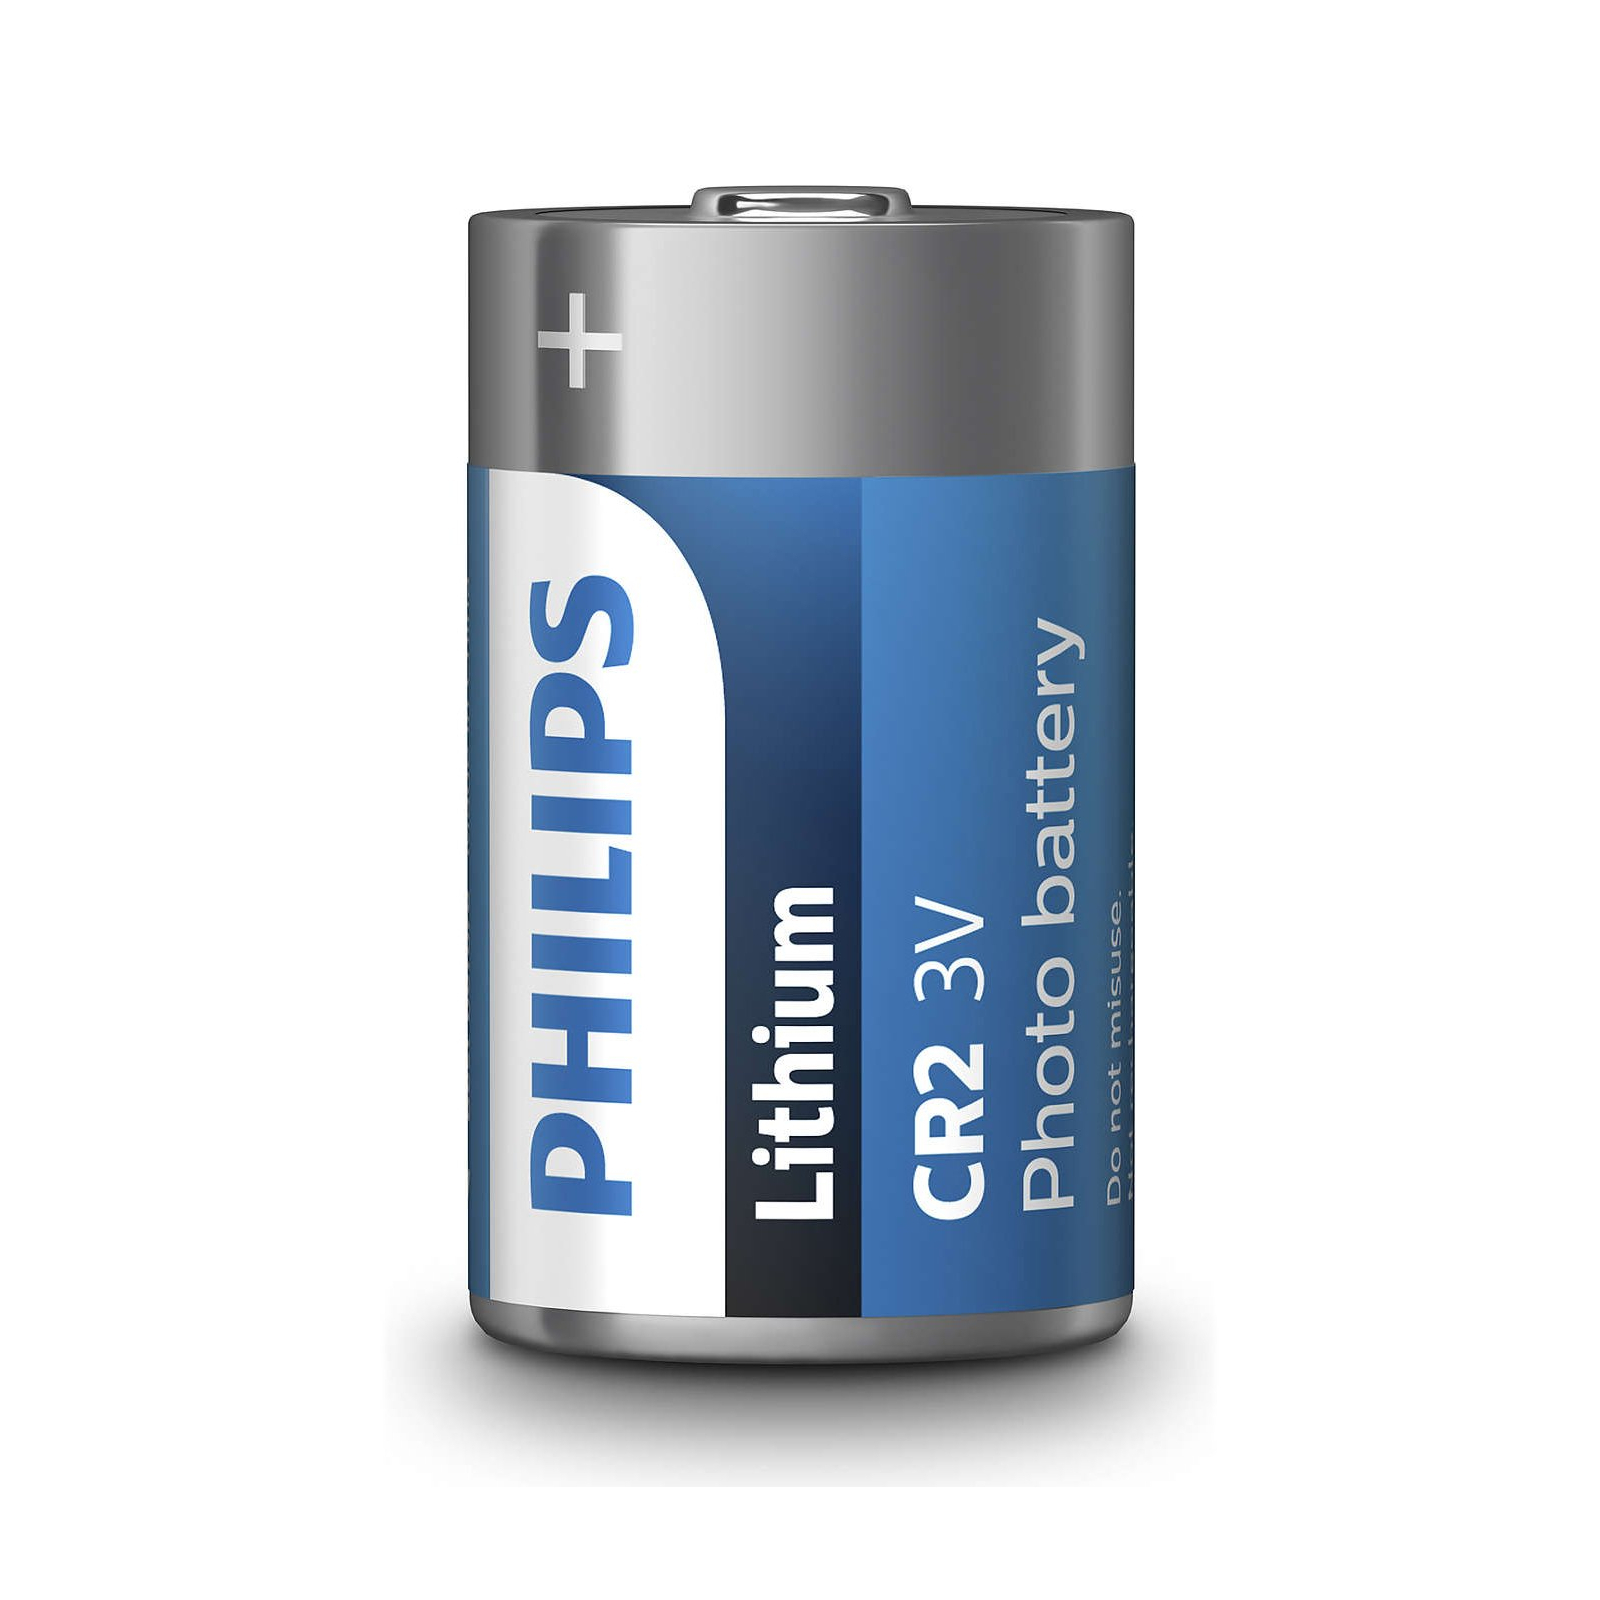 Батарейка Philips CR2 Lithium Photo 3V (CR2/01B) изображение 2